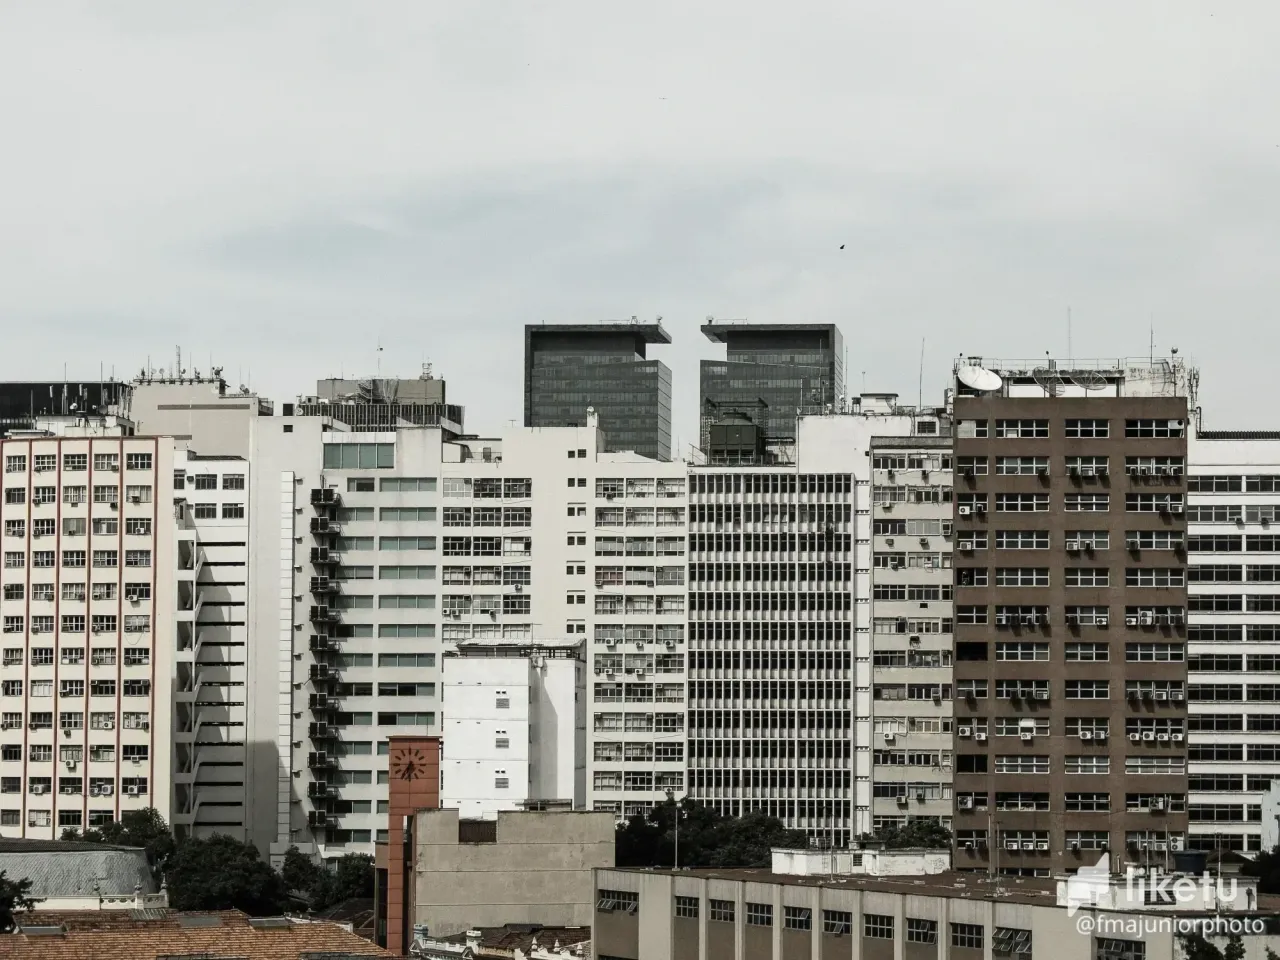 Buildings in downtown Rio de Janeiro